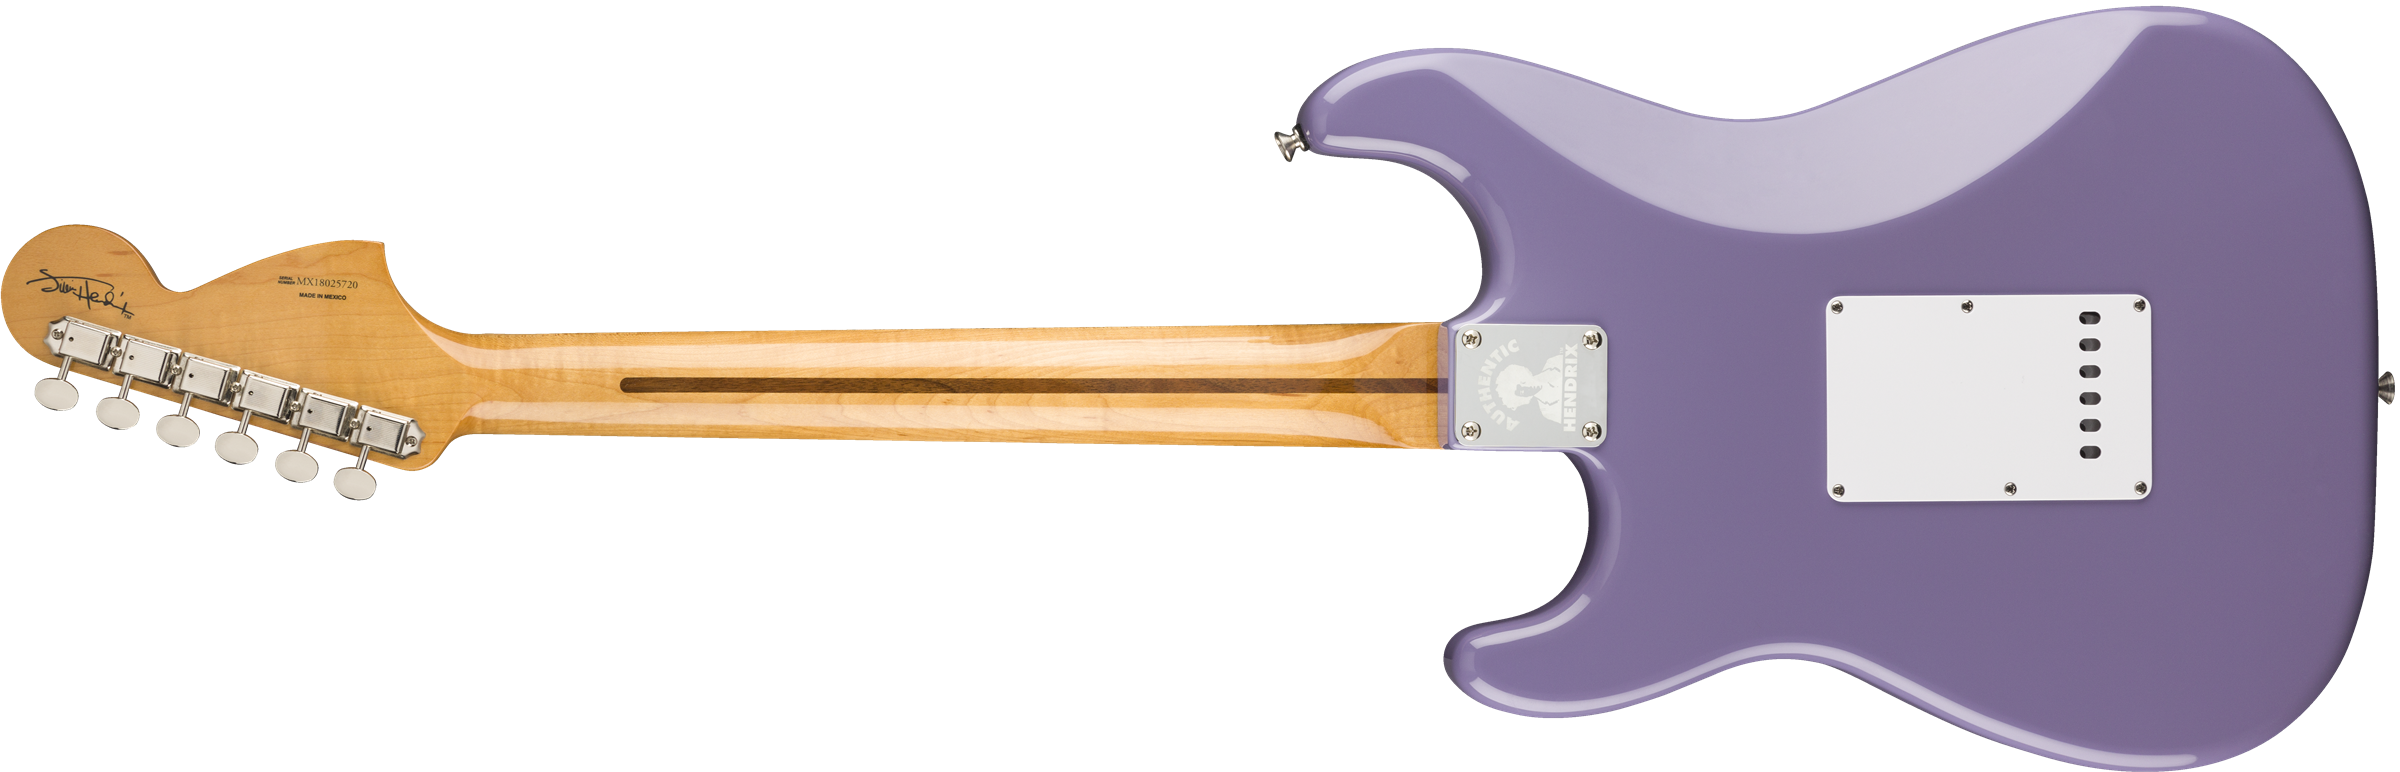 Fender Jimi Hendrix Strat Signature 2018 Mn - Ultra Violet - E-Gitarre in Str-Form - Variation 1